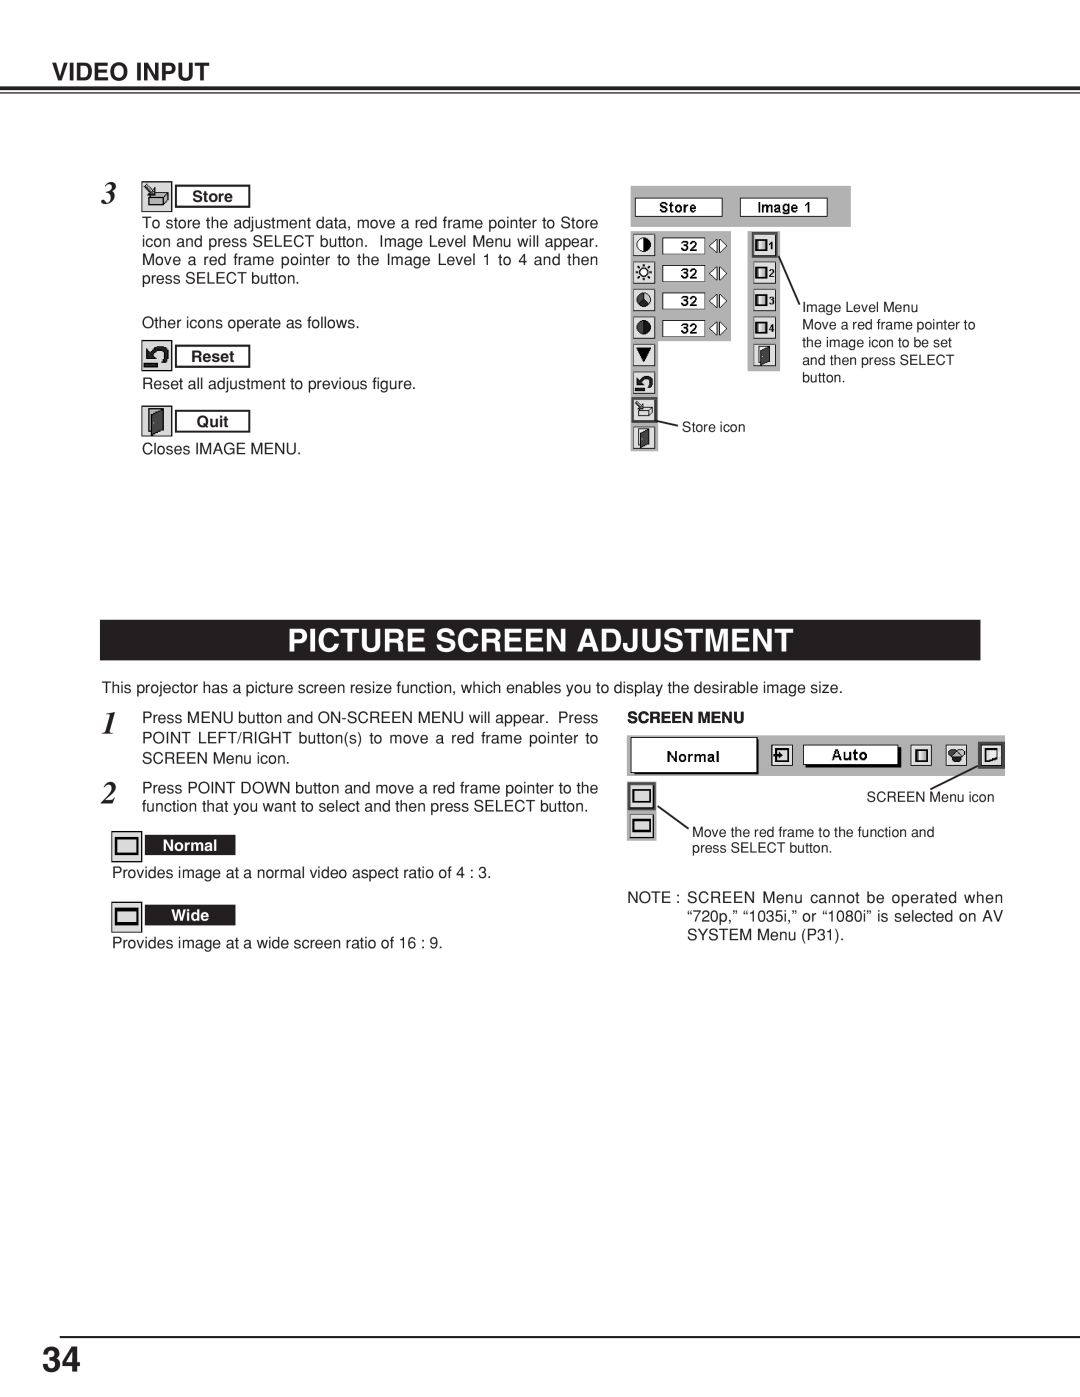 BOXLIGHT CP-19t manual Picture Screen Adjustment, Video Input, Store, Reset, Quit, Normal, Wide, Screen Menu 